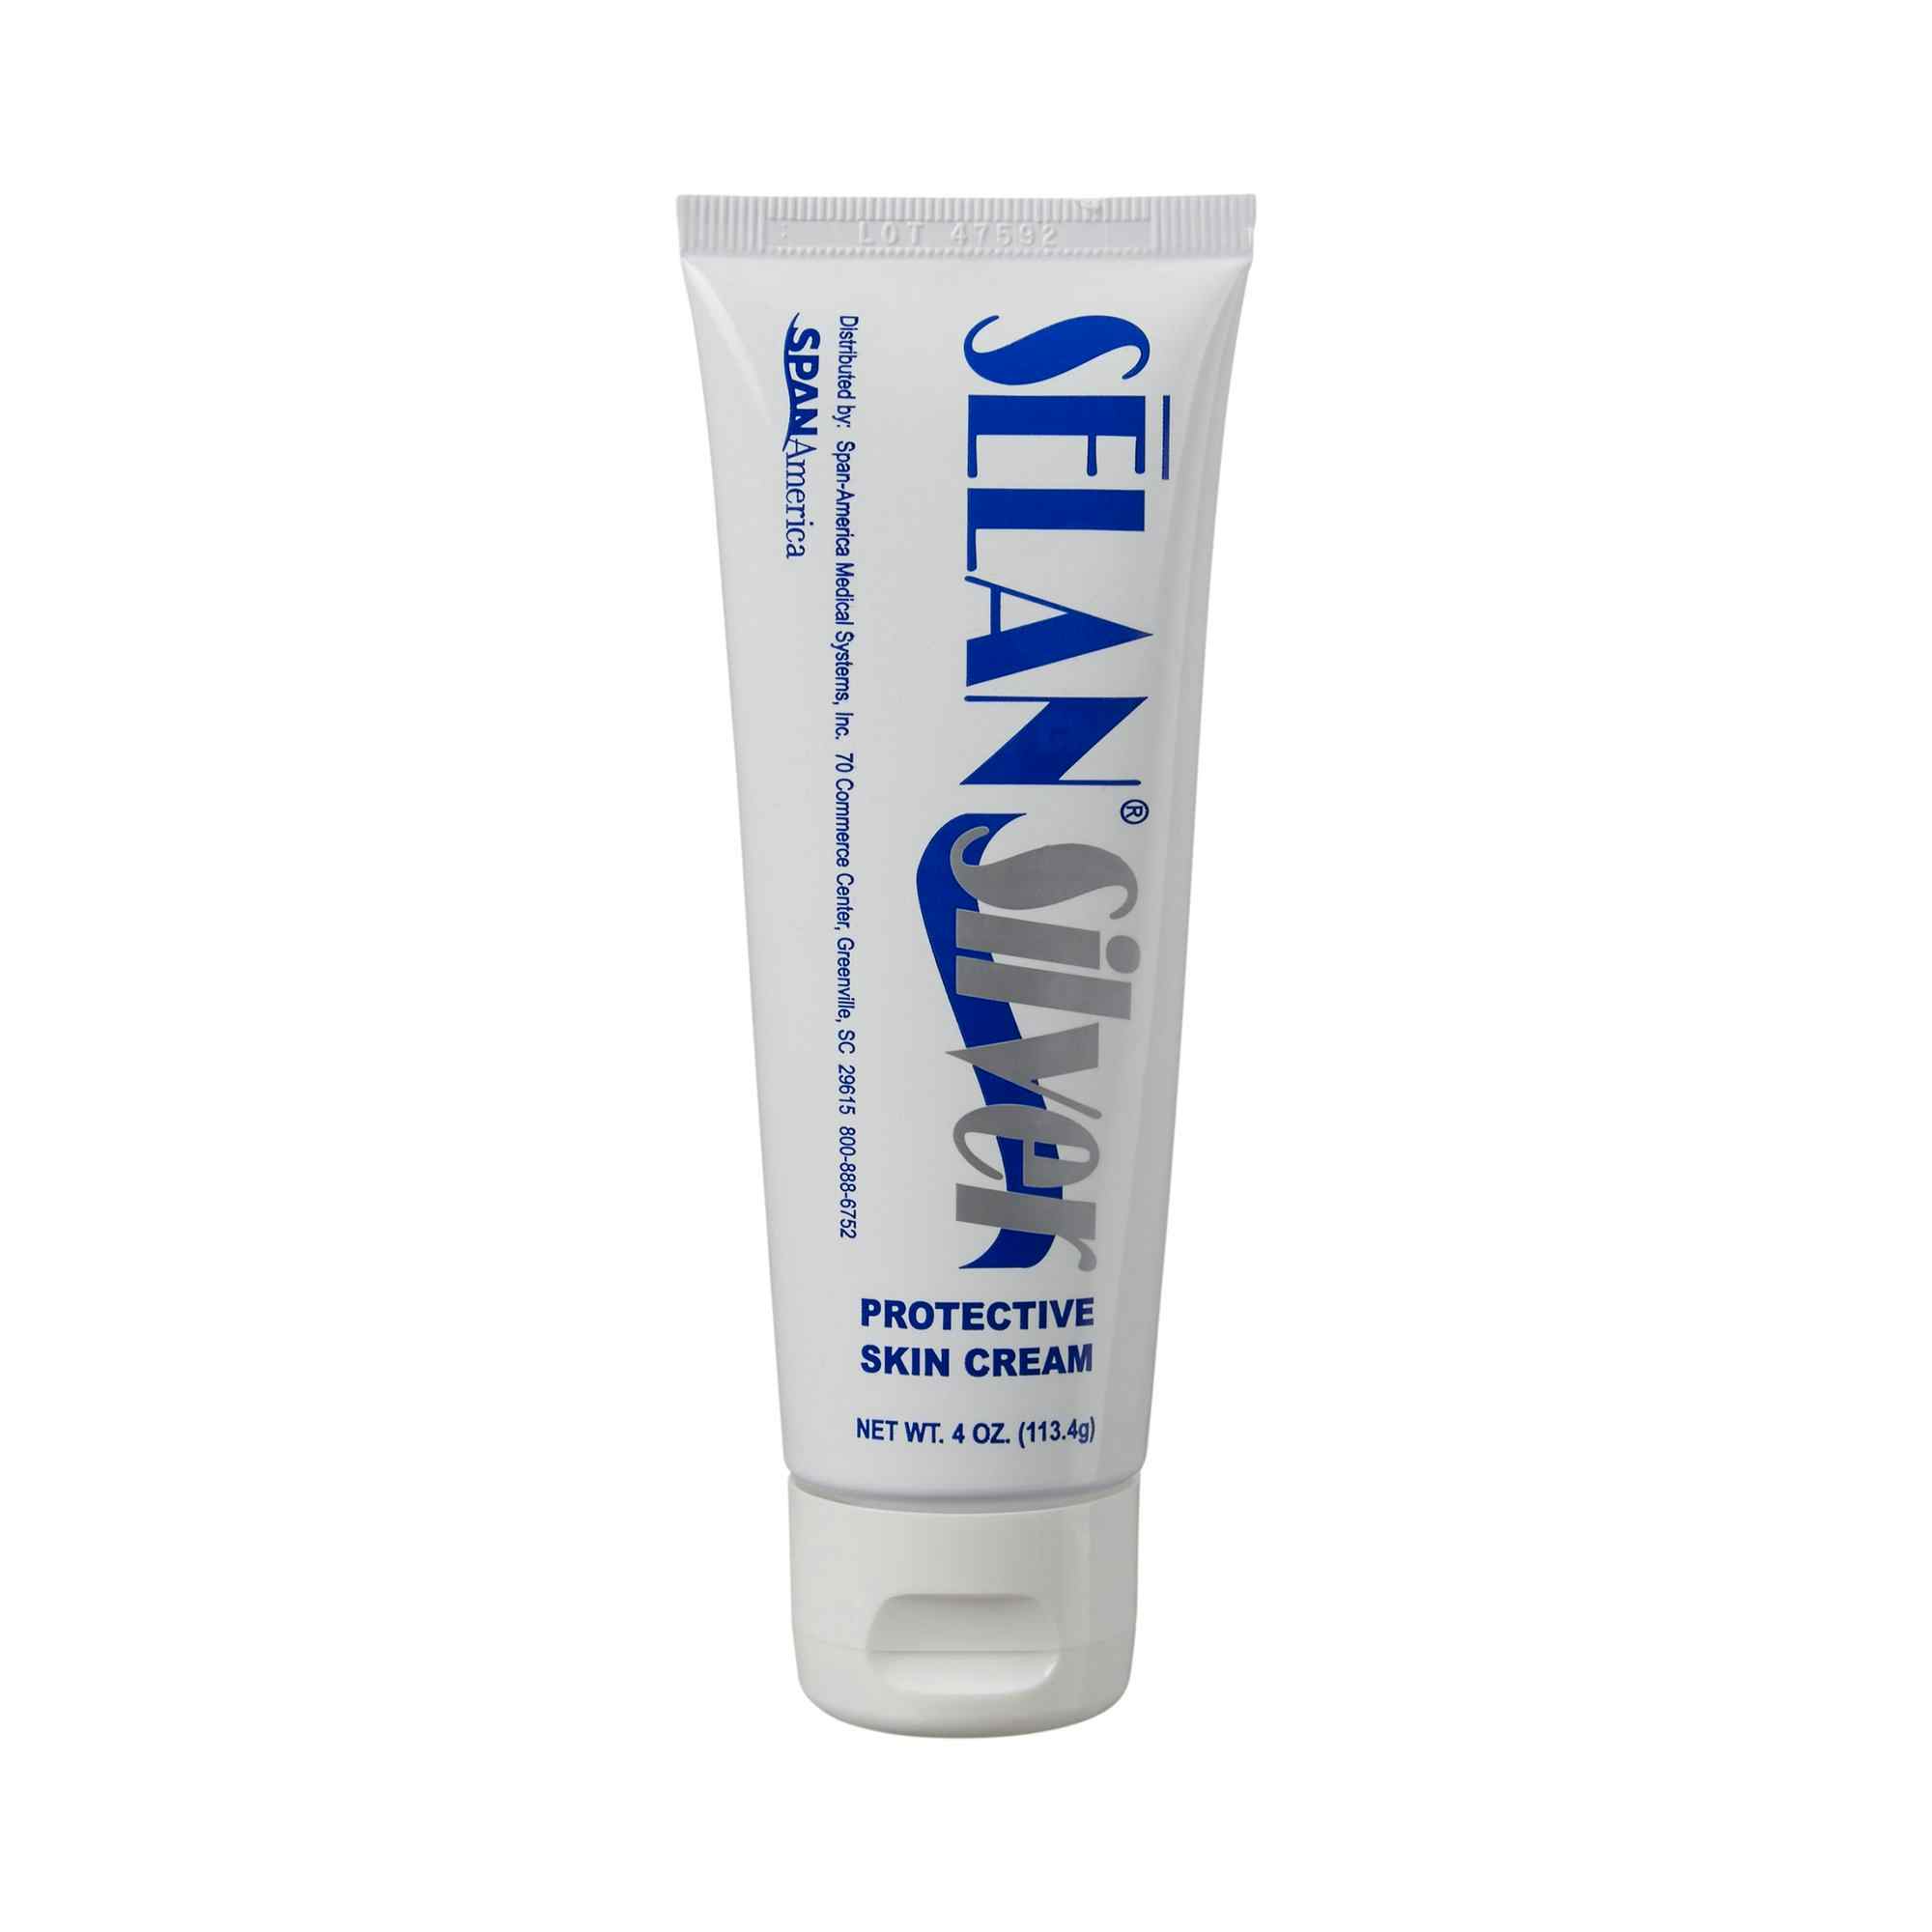 Selan Silver Protective Skin Cream, Tube, Scented Cream, 4 oz., SSPC04012, 1 Tube